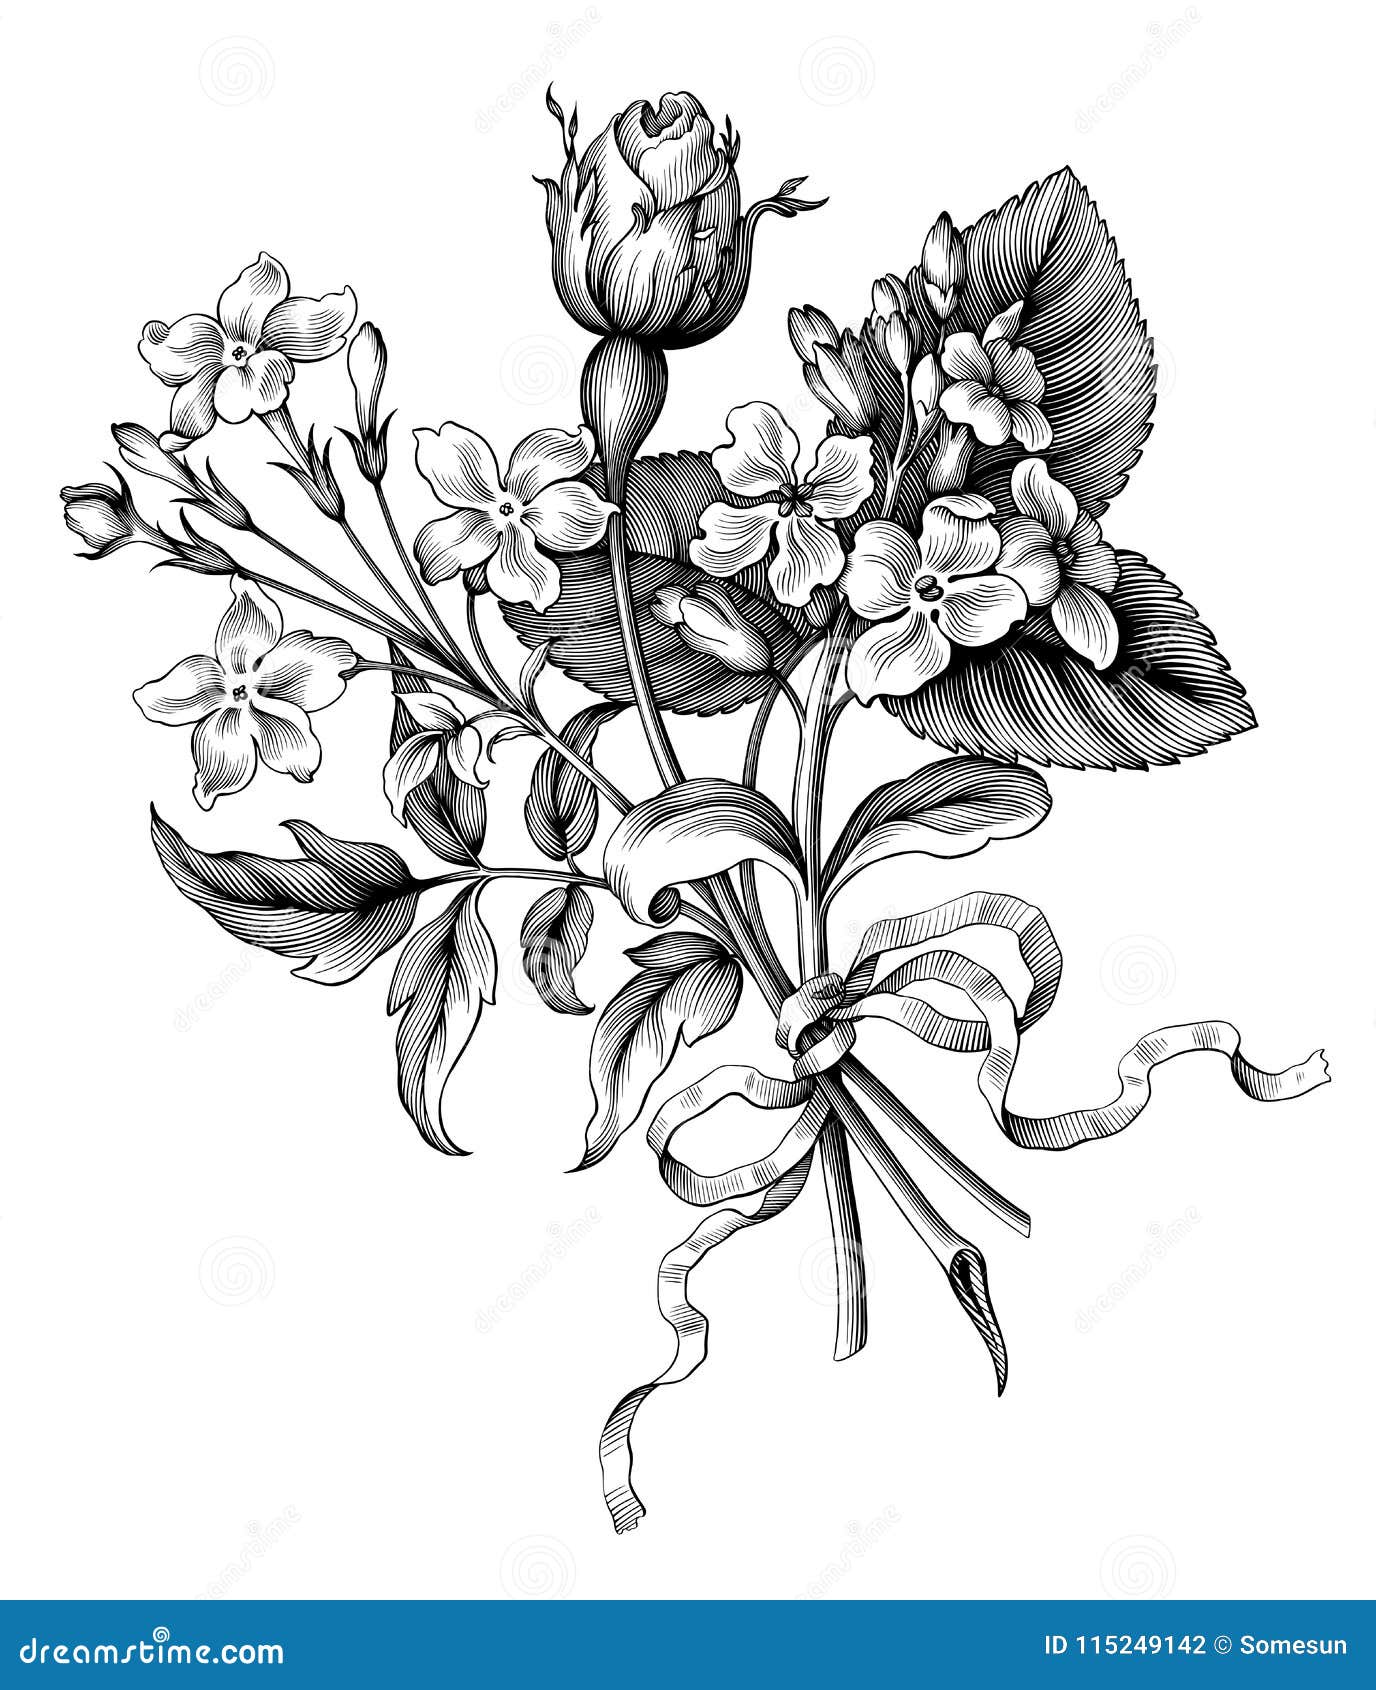 Alice in the Rose Garden  Sketch  SOLD